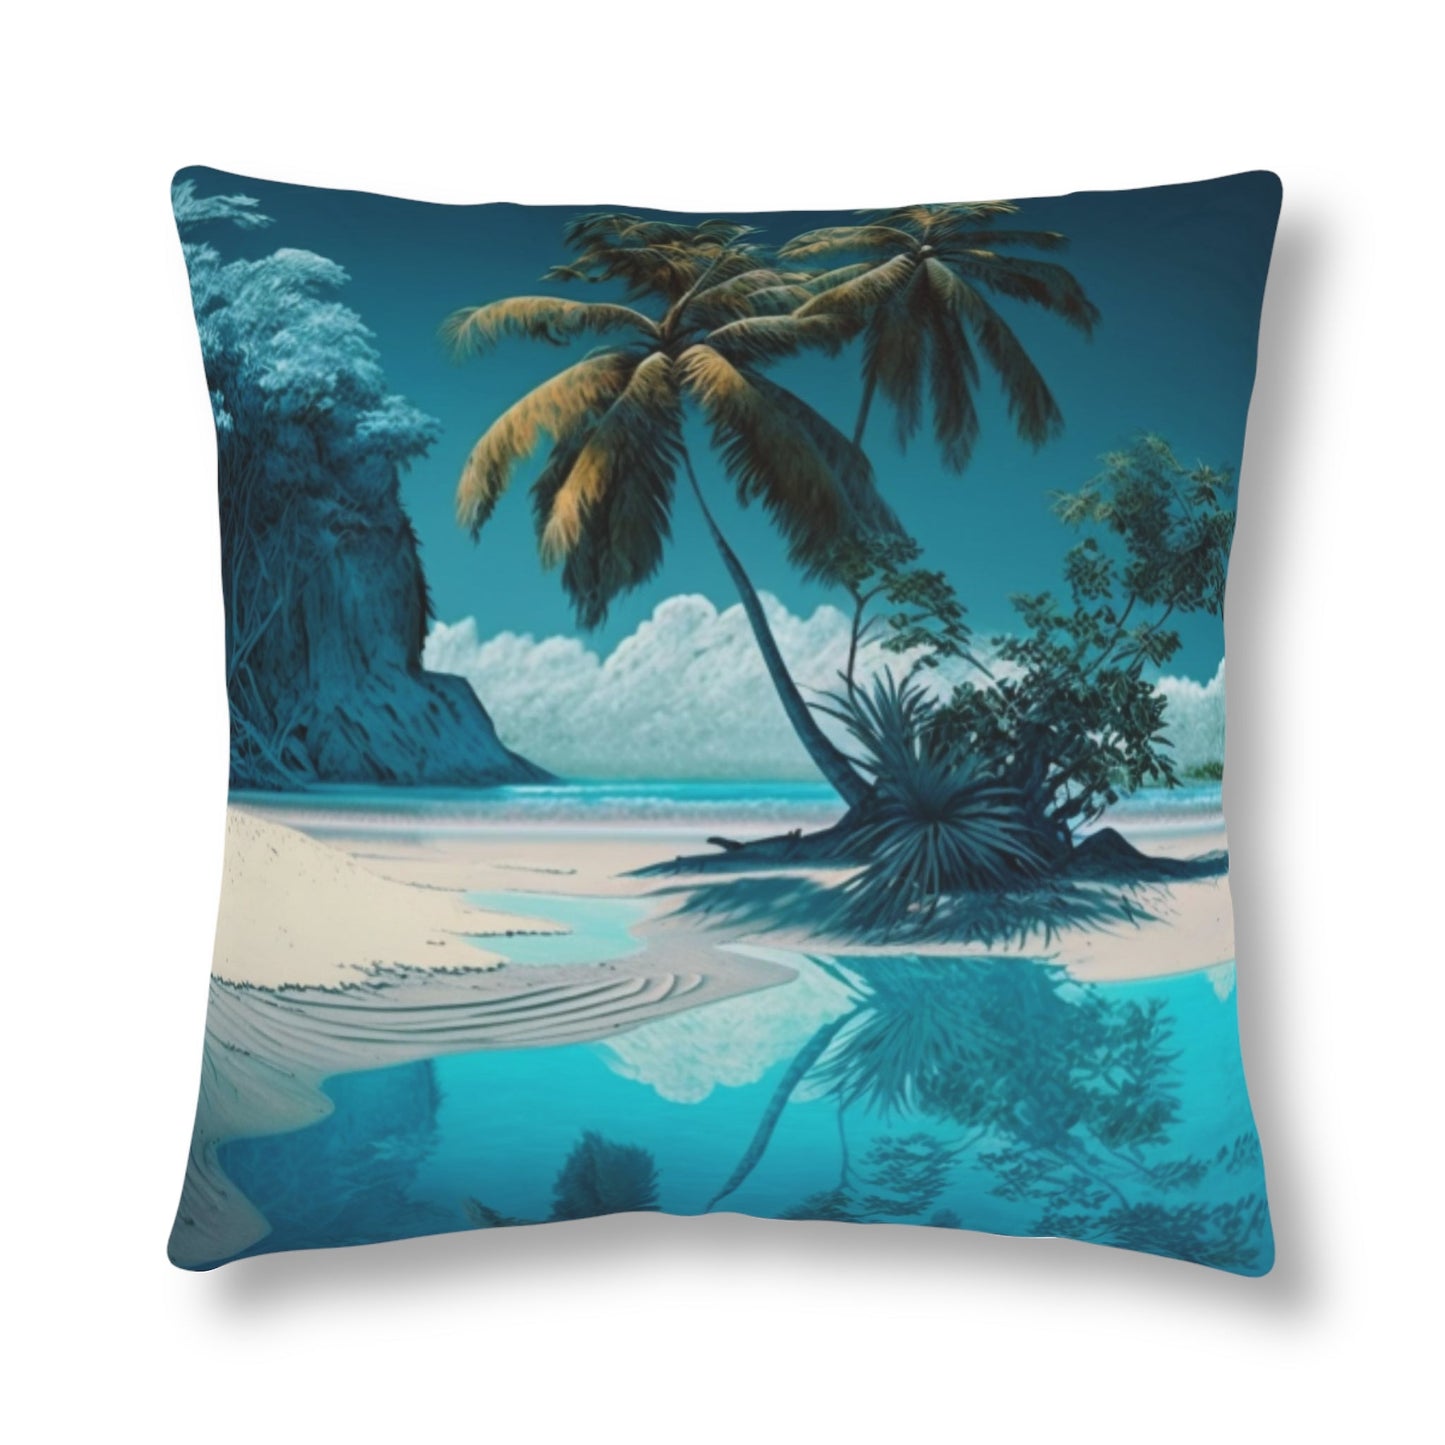 Home Decor - Tropical Hideaway Waterproof Pillows